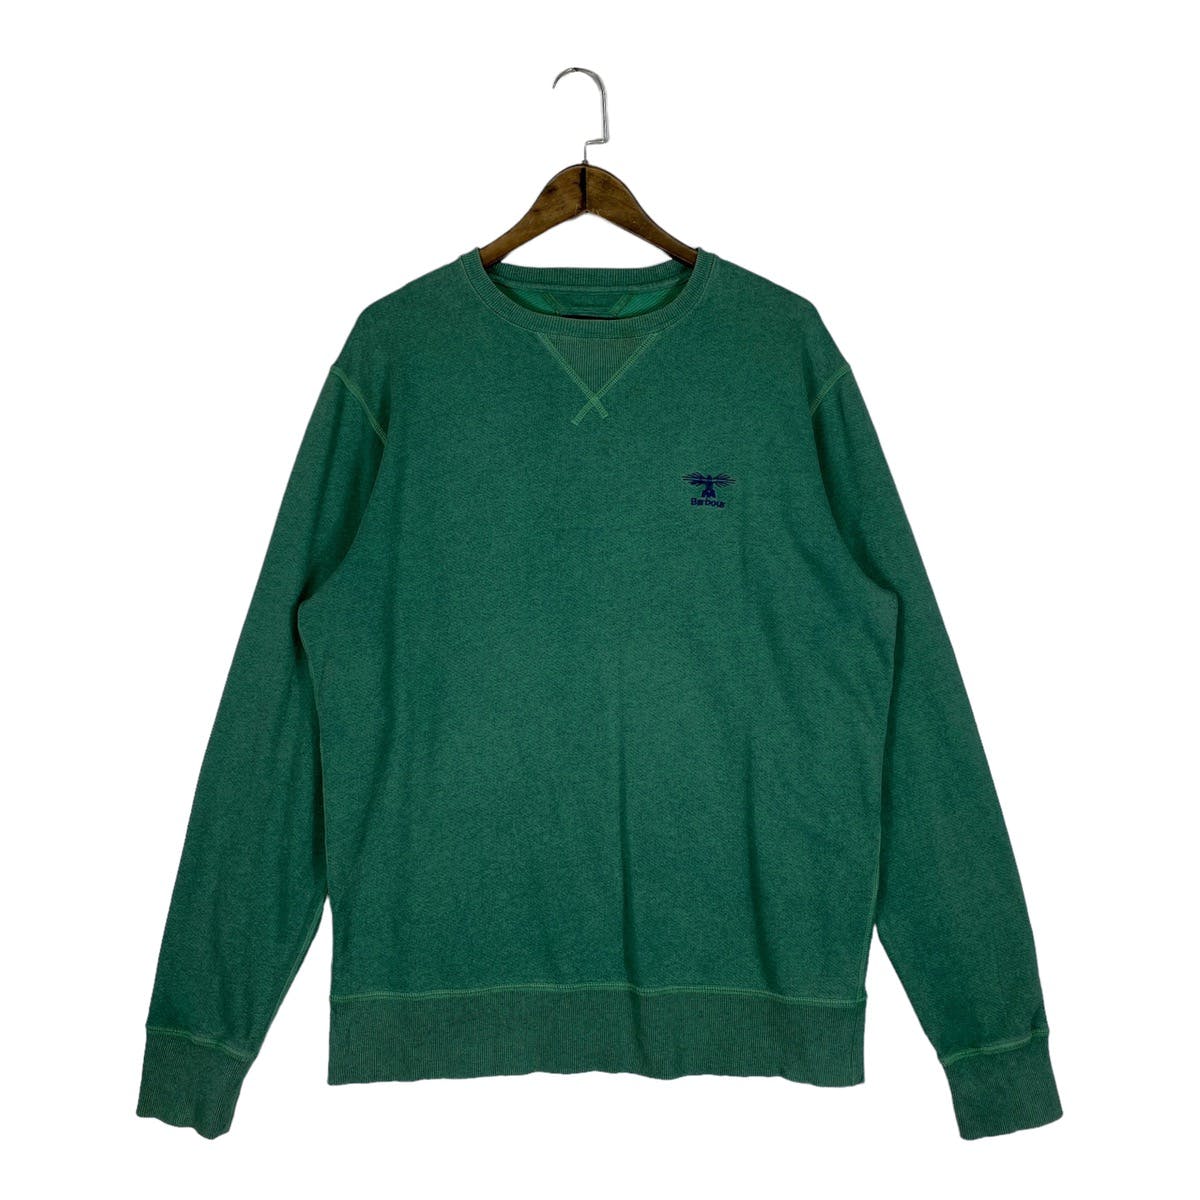 Vintage Barbour Sweatshirt Crewneck Made In Portugal - 2